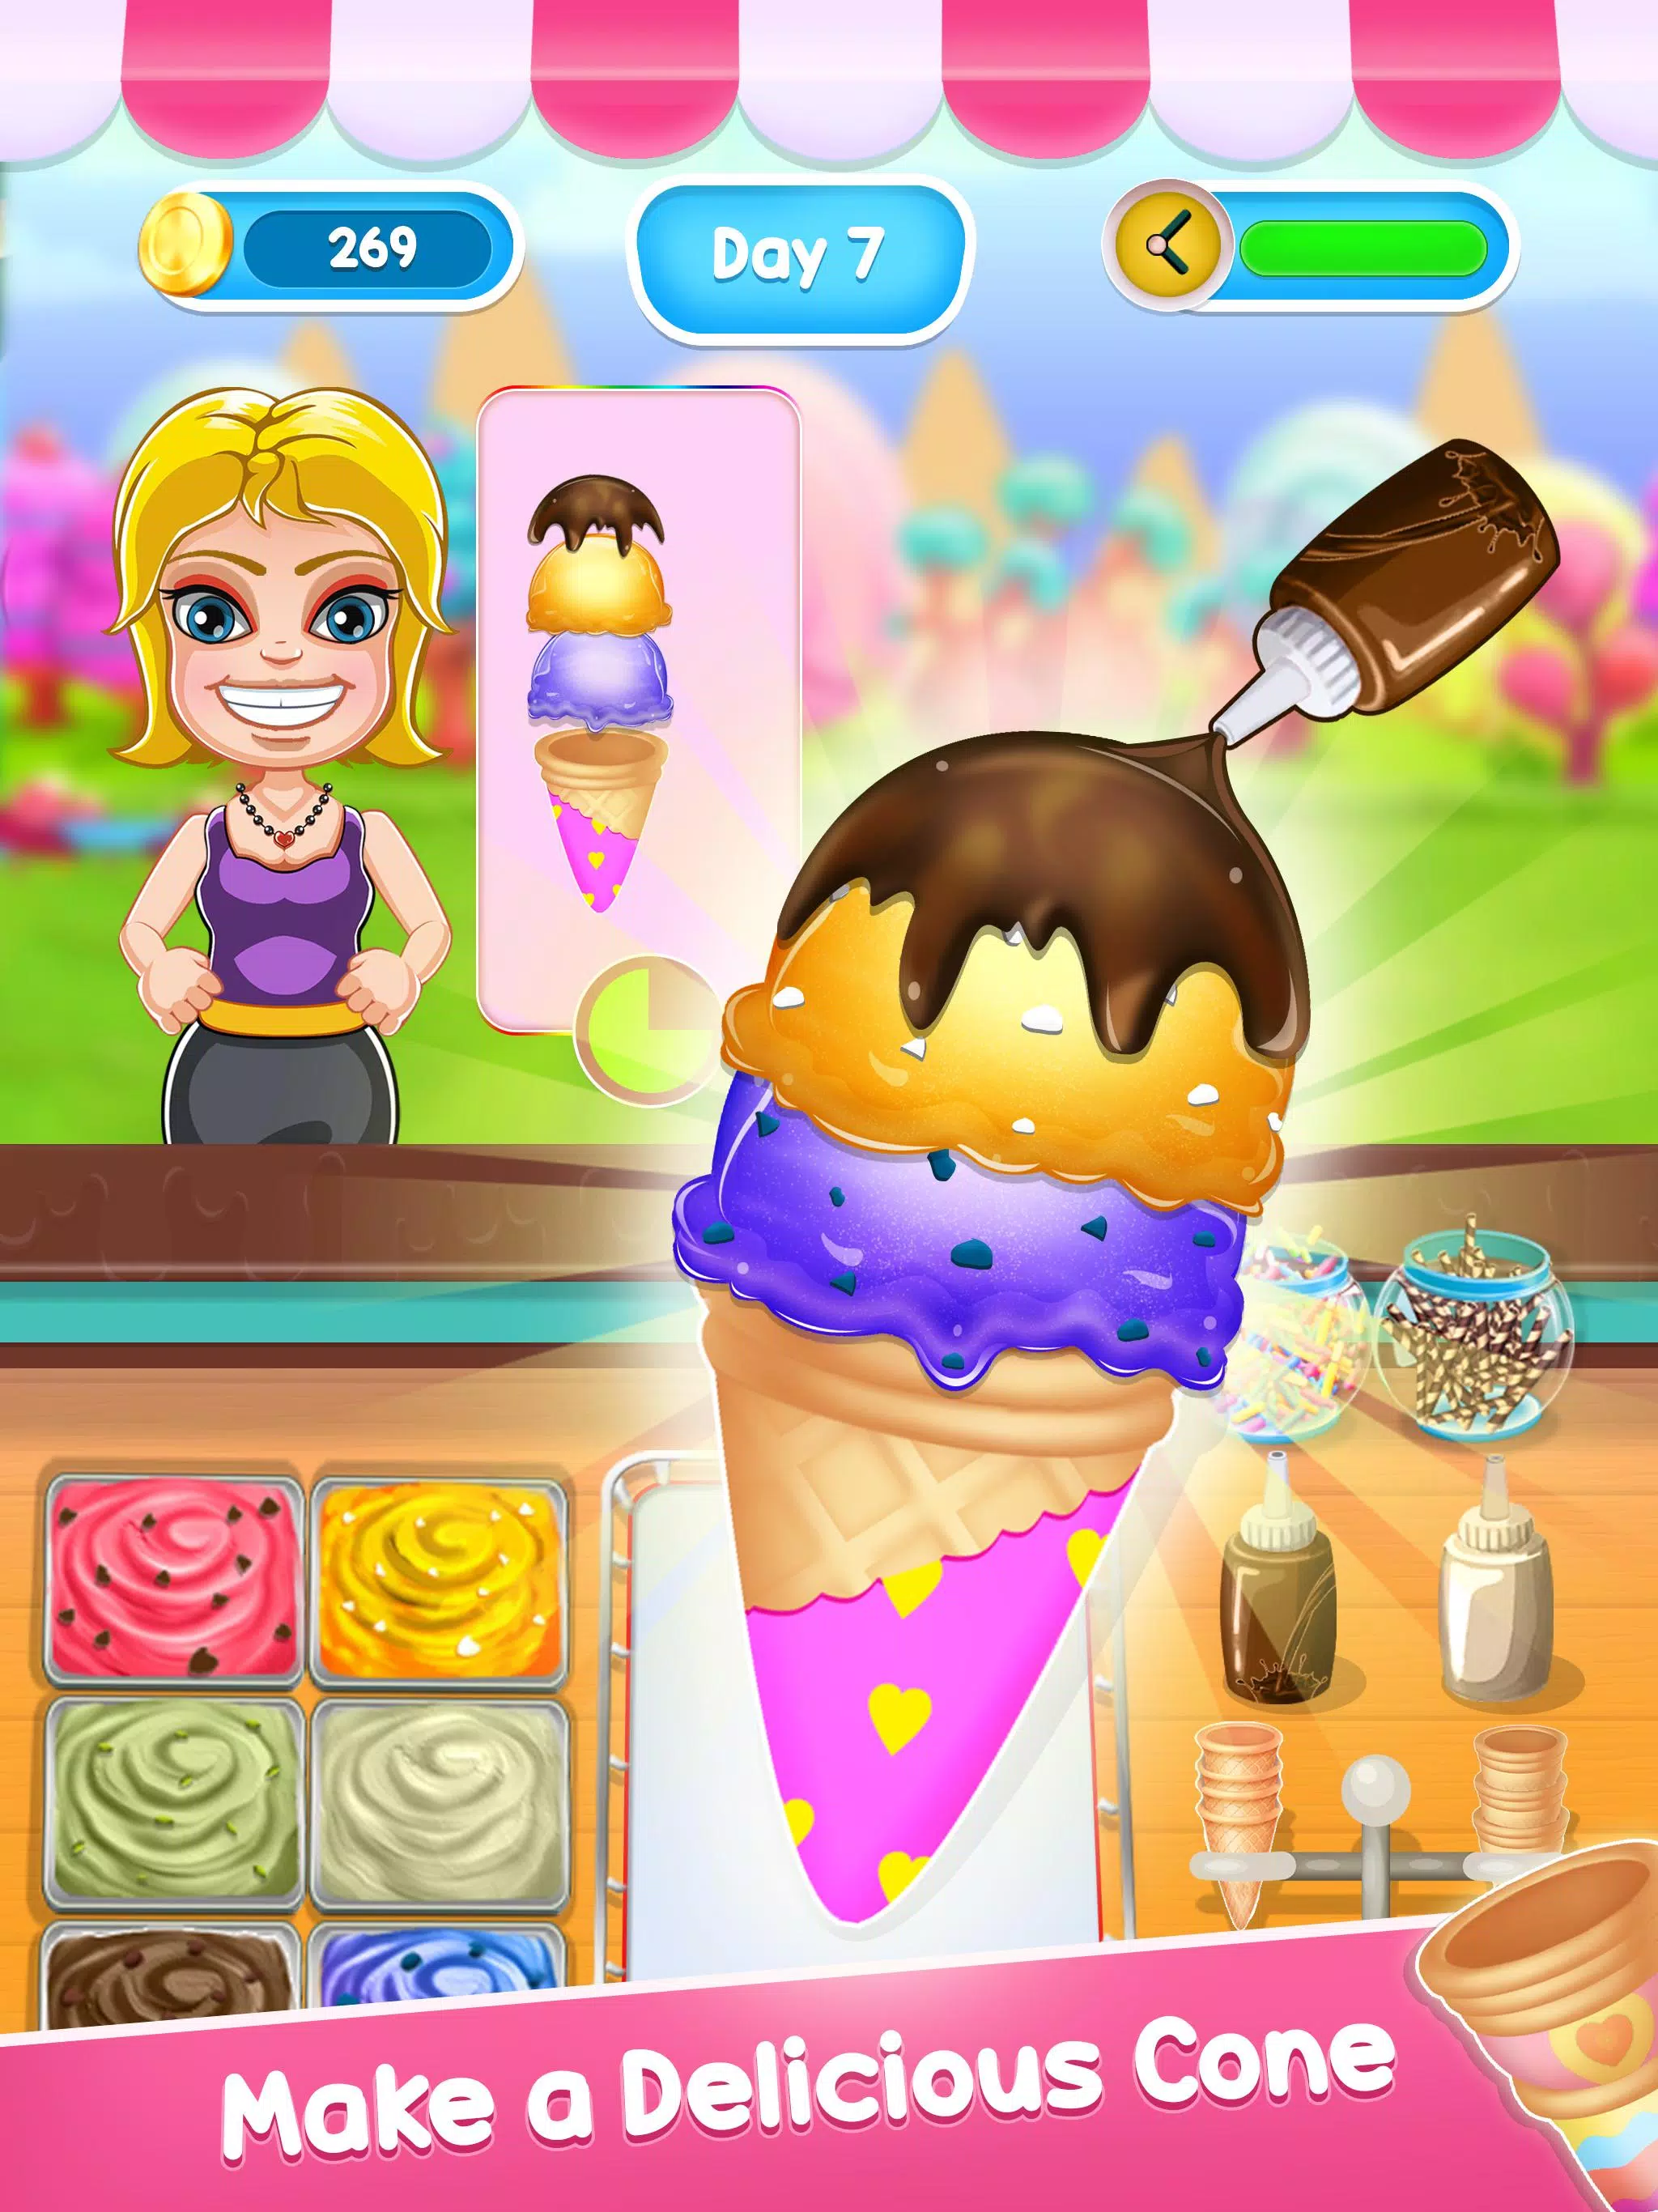 My Ice Cream Maker - Frozen Dessert Making Game - APK Download for